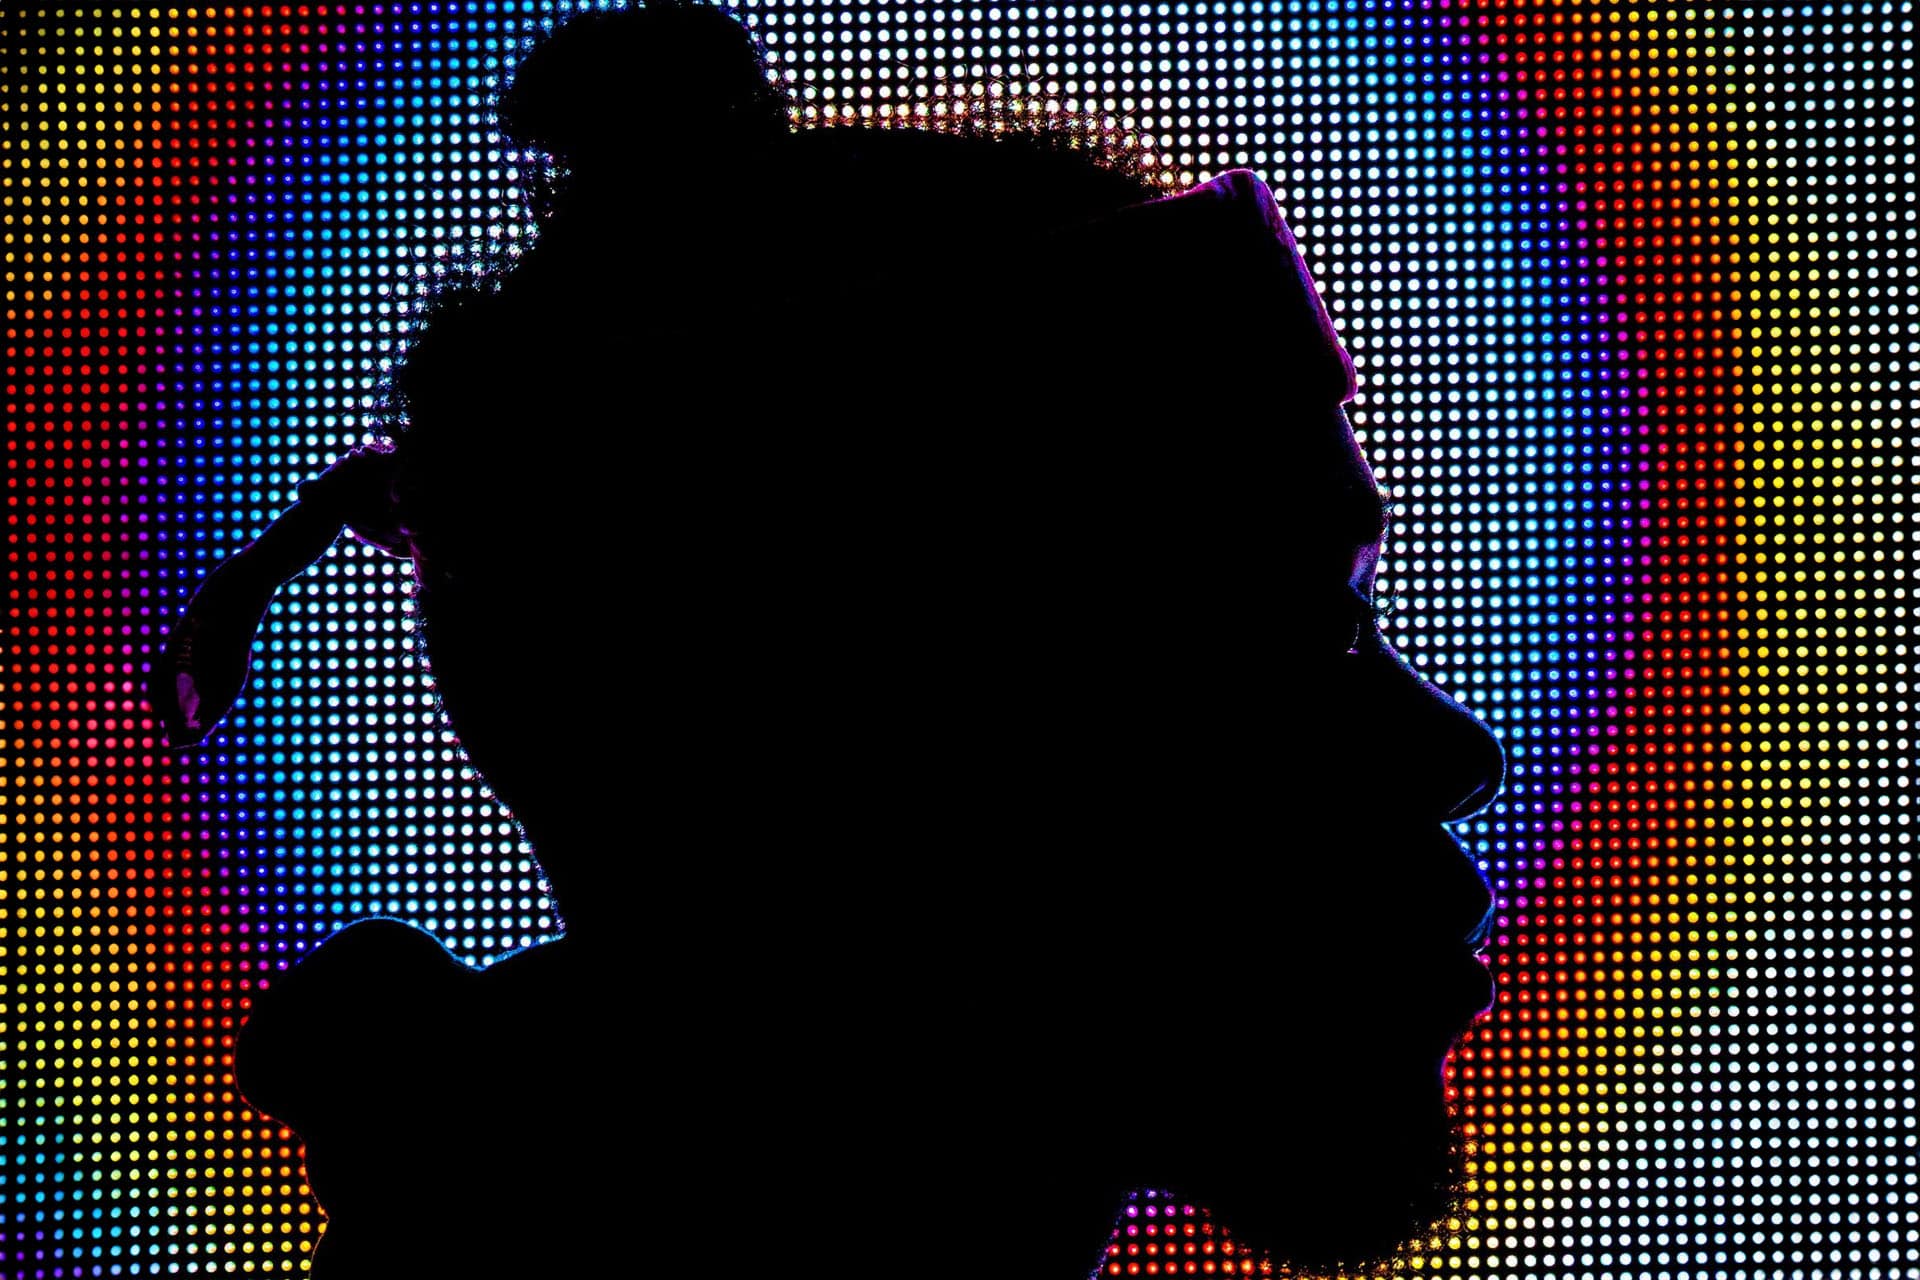 Silhouette of man's head against a multicoloured dot matrix neon background.